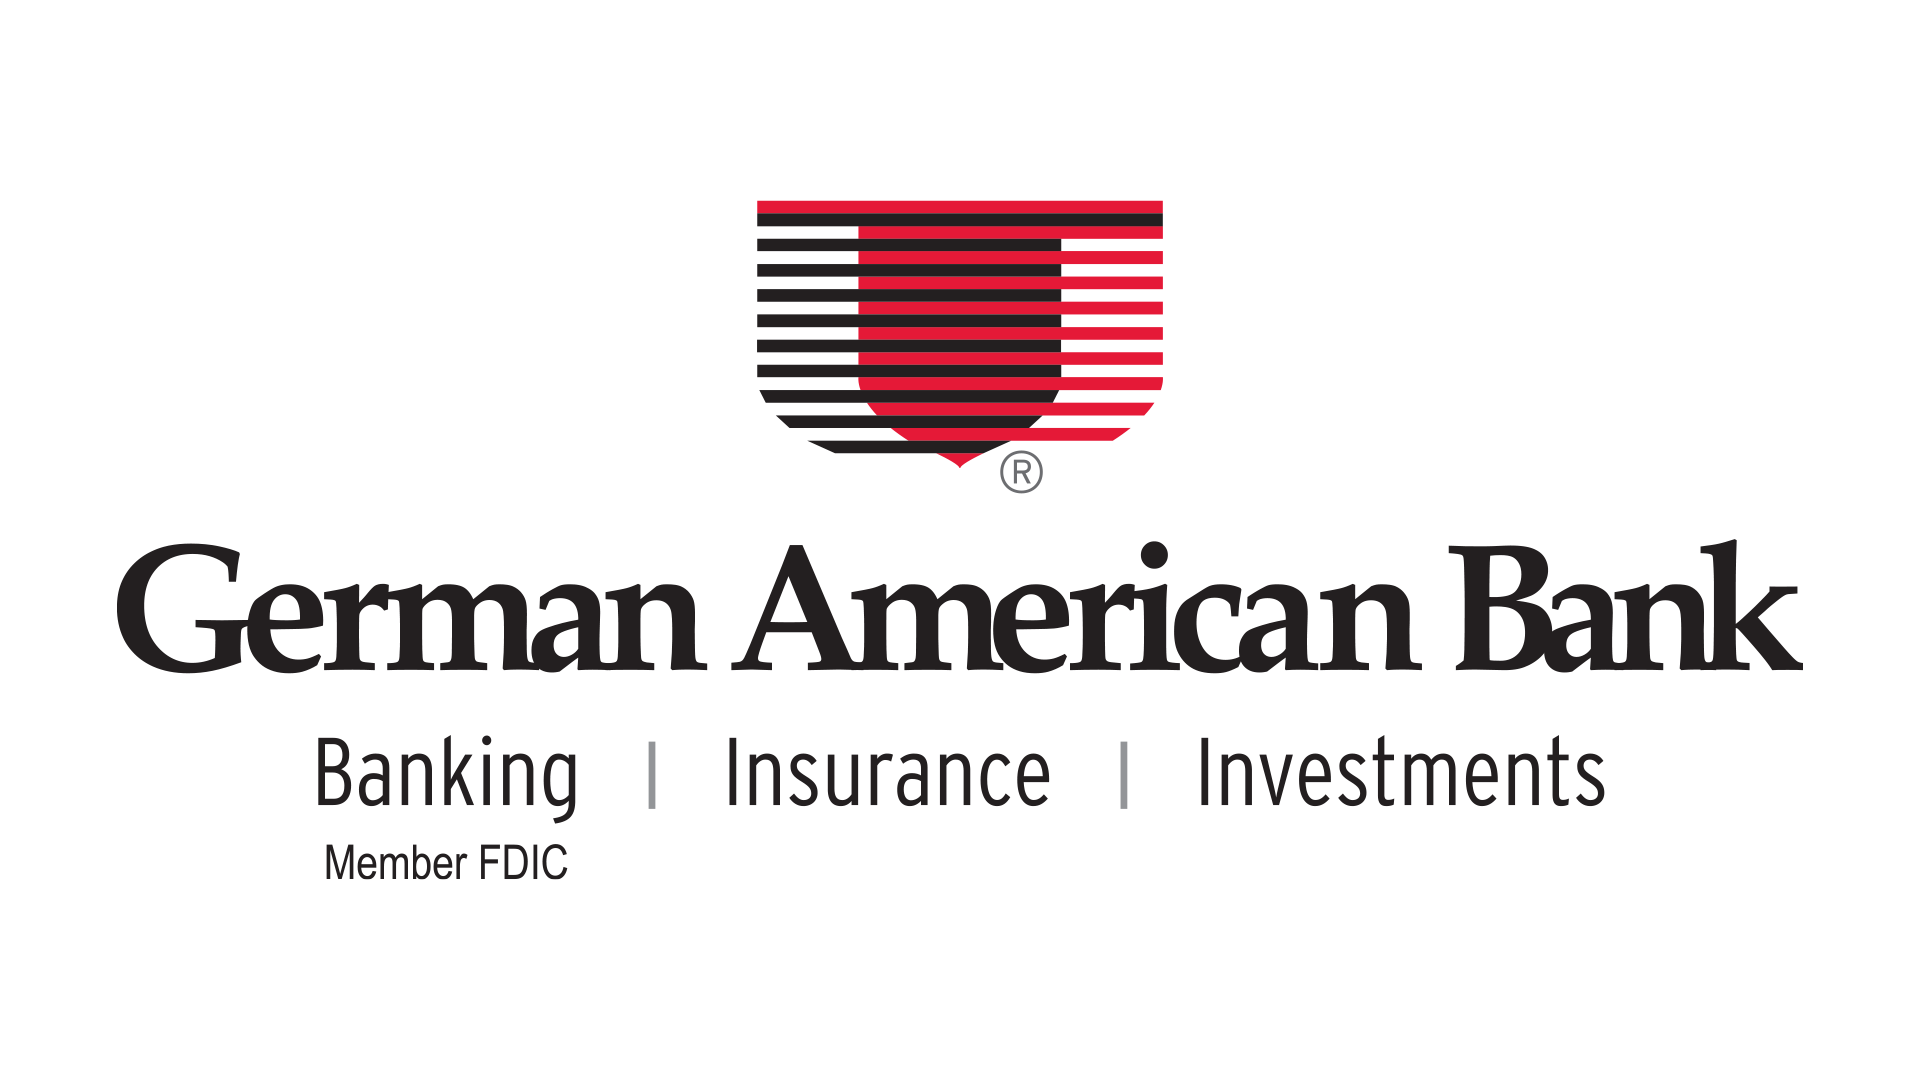 German American Bank Logo